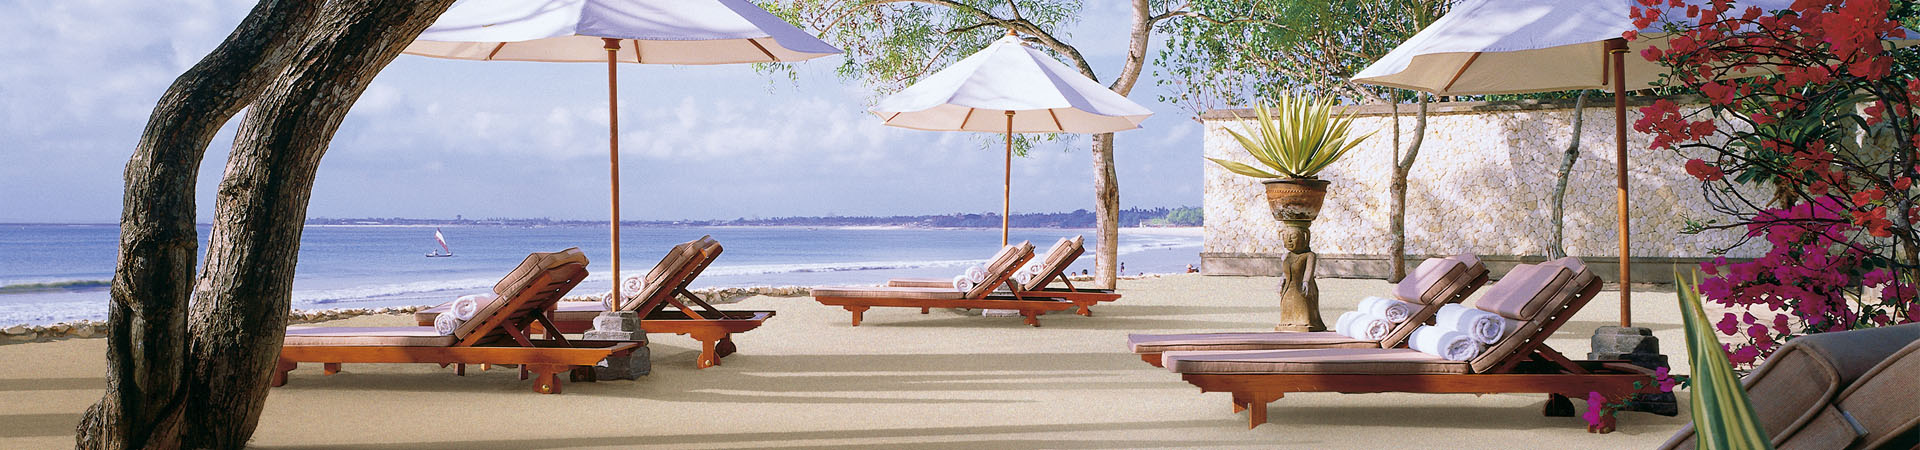 Image of Four Seasons Resort Bali at Jimbaran Bay